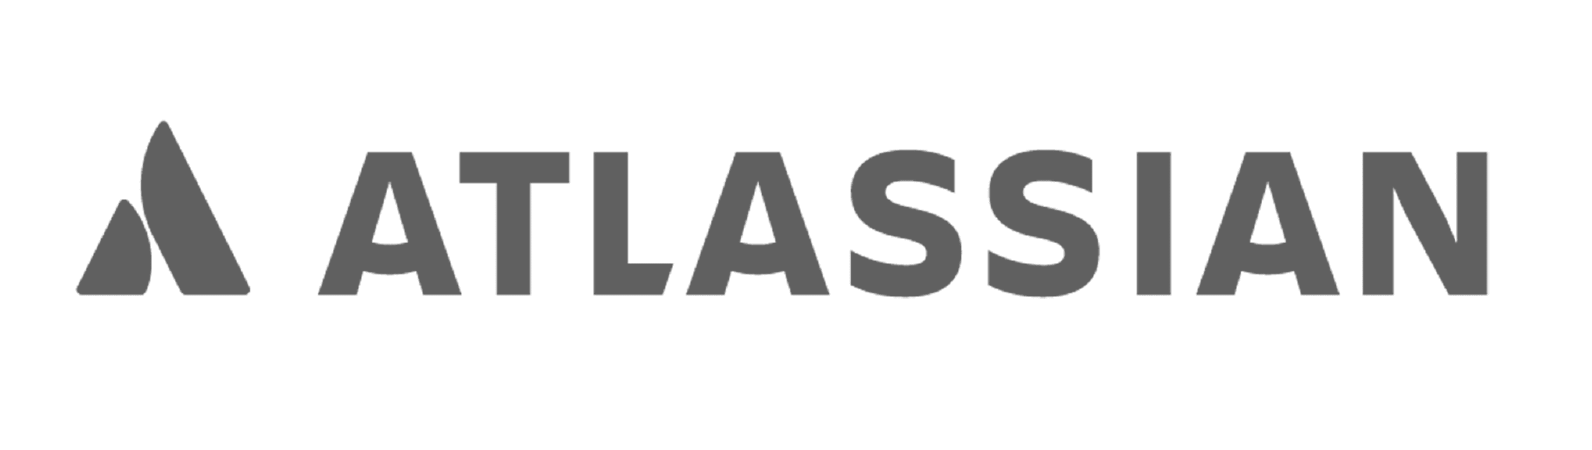 atlassian logo